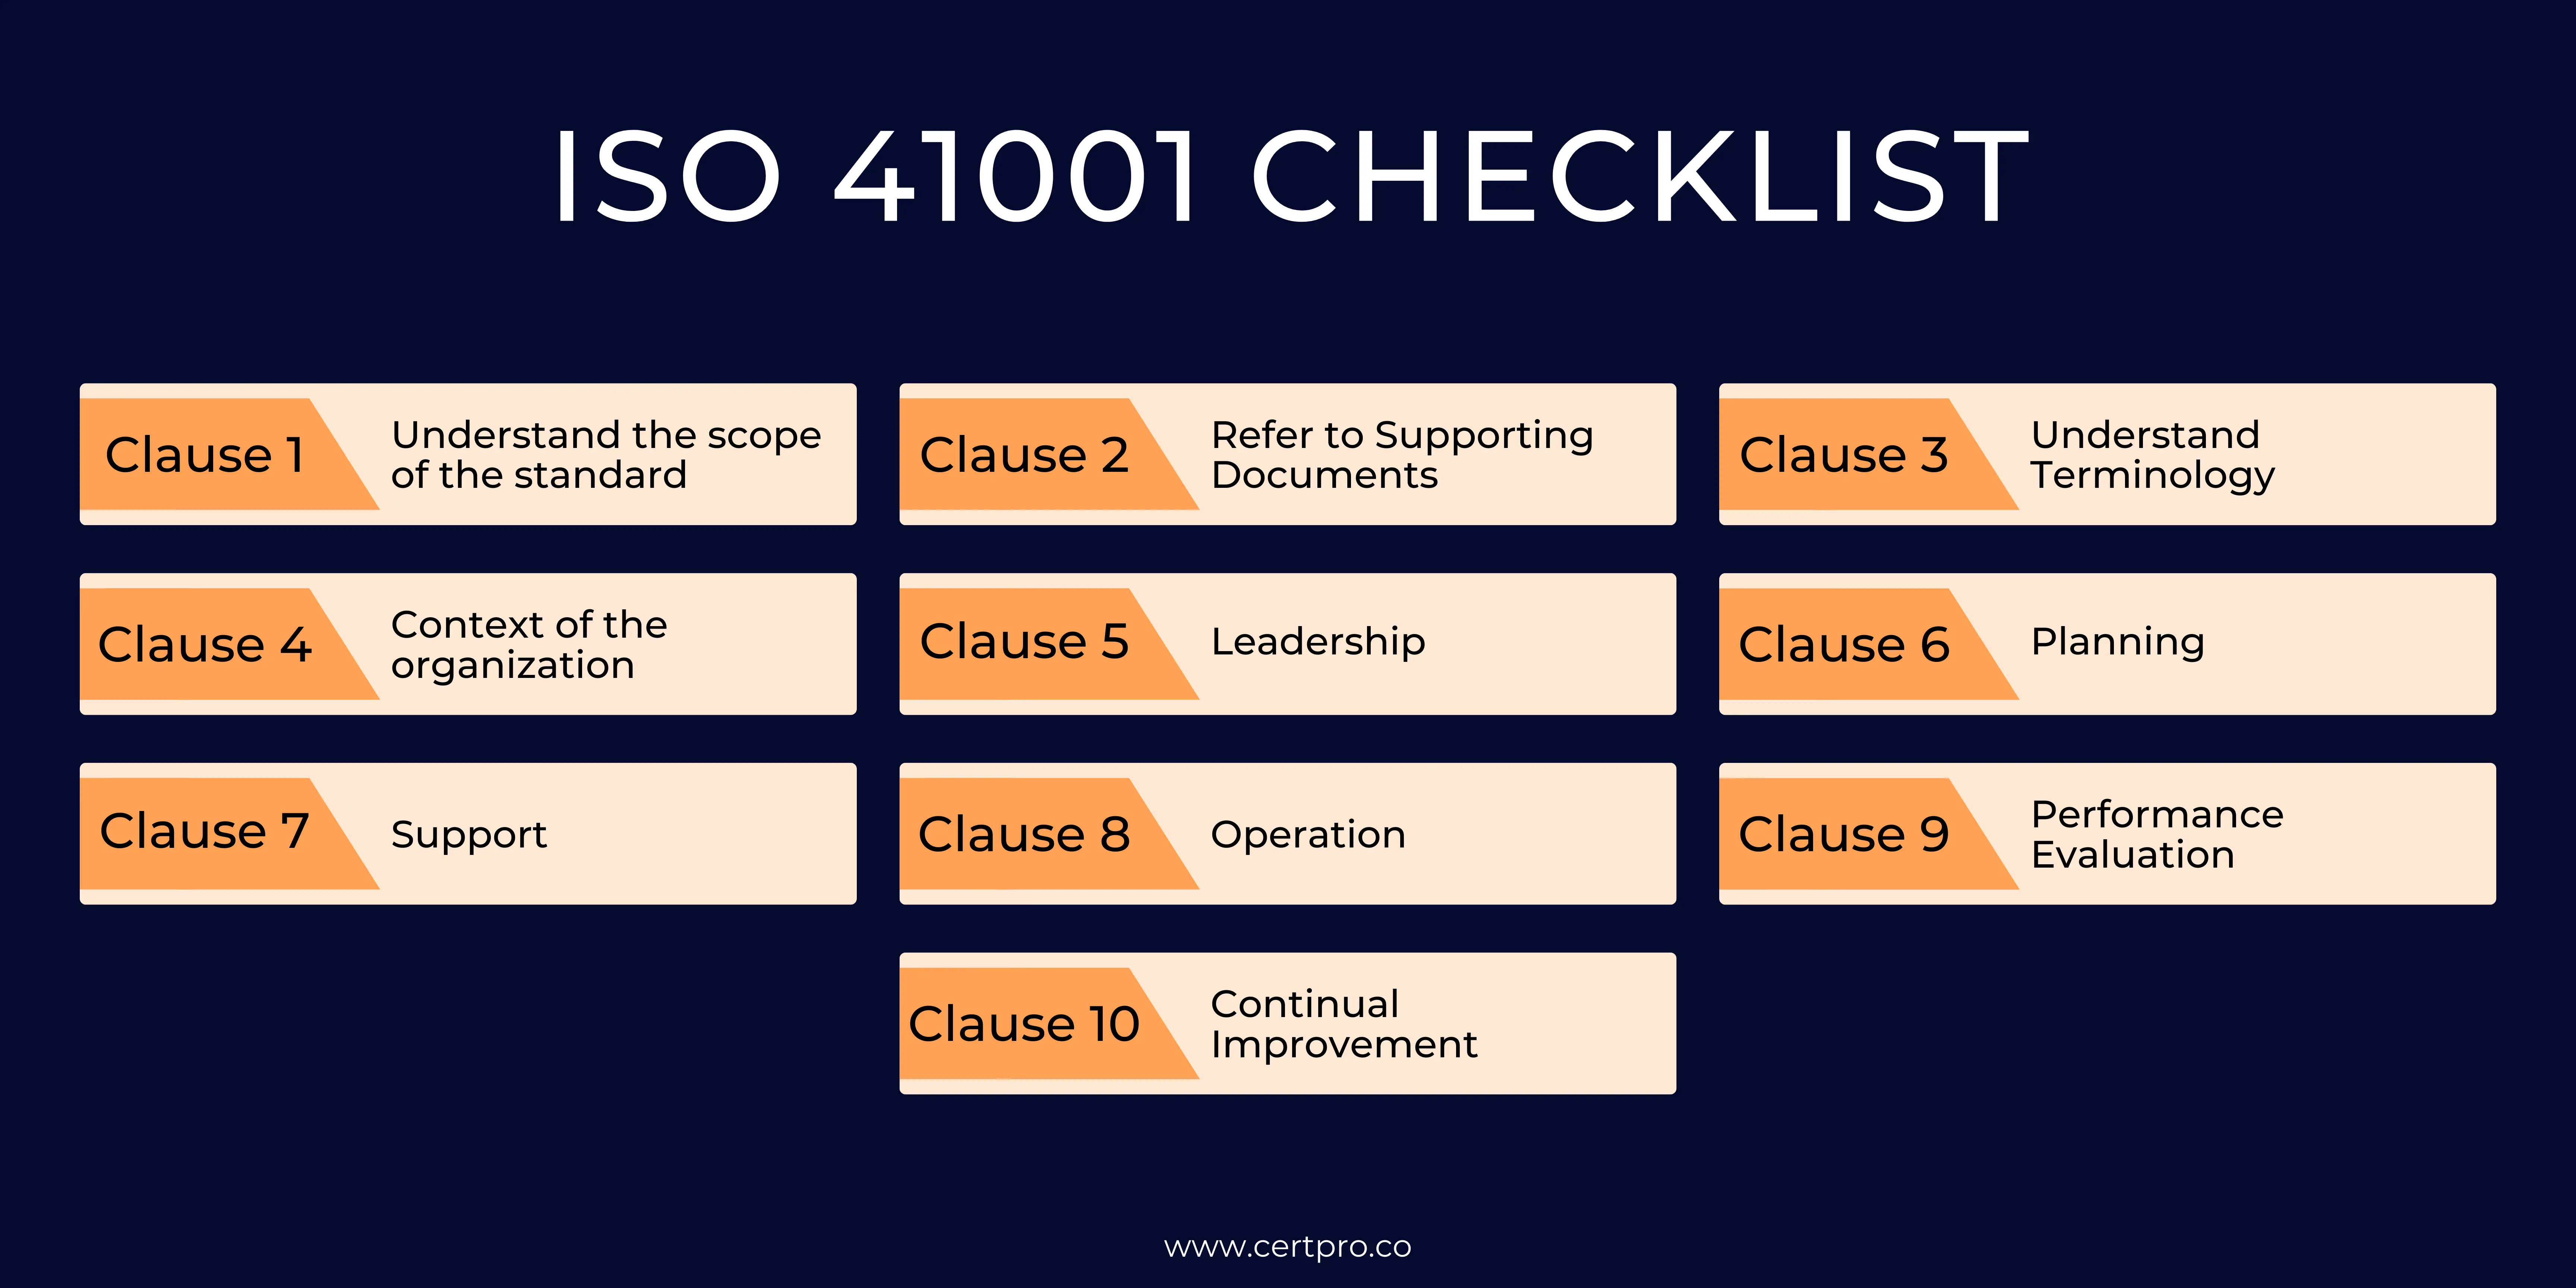 ISO 41001 CHECKLIST